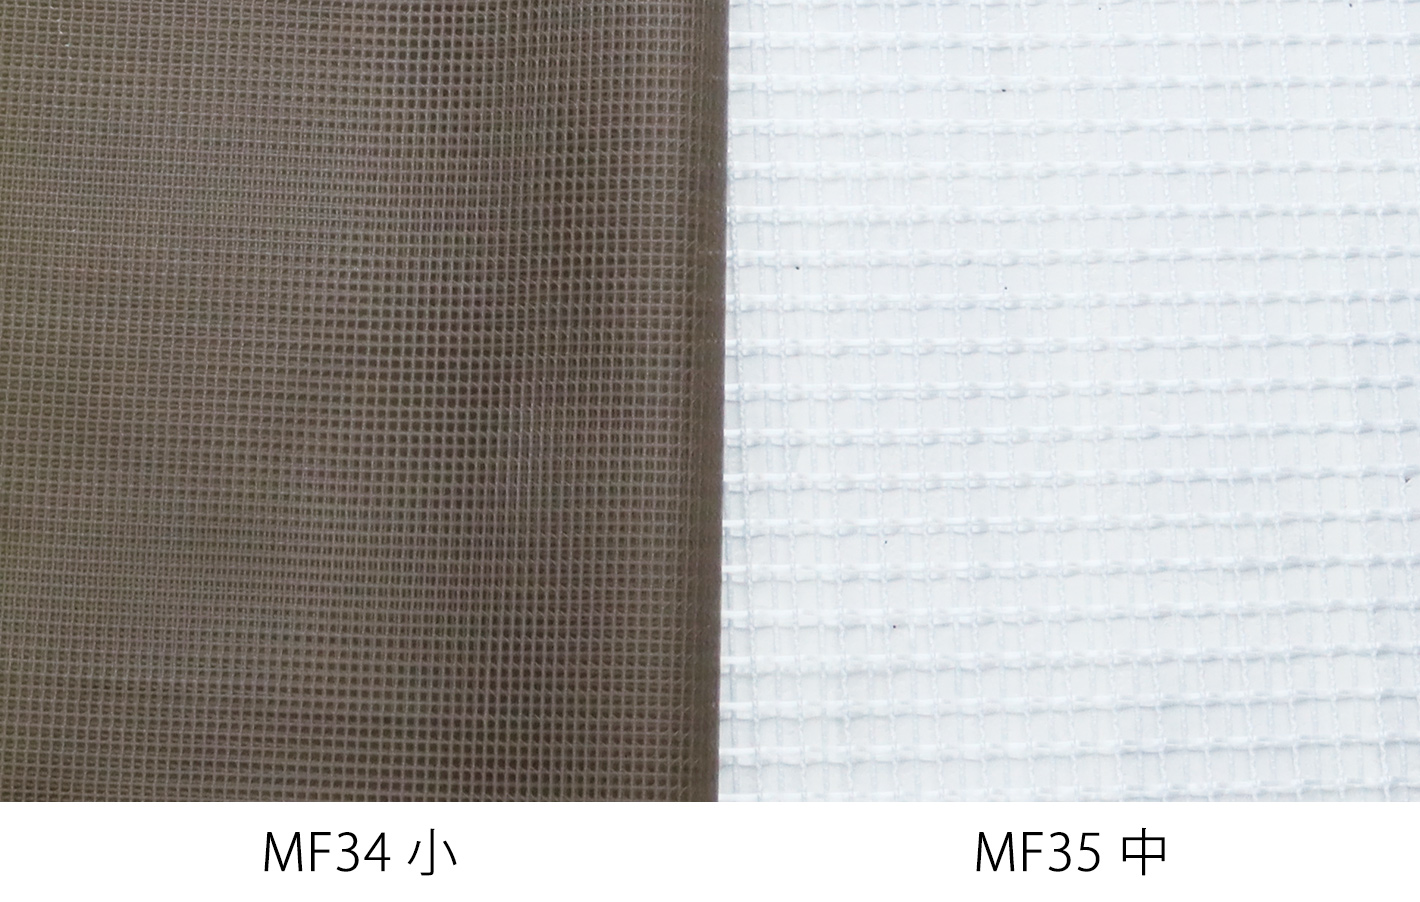 MF35-11 ネットビニール生地 チェック中 巾約72cm 厚さ0.4mm (本) 5